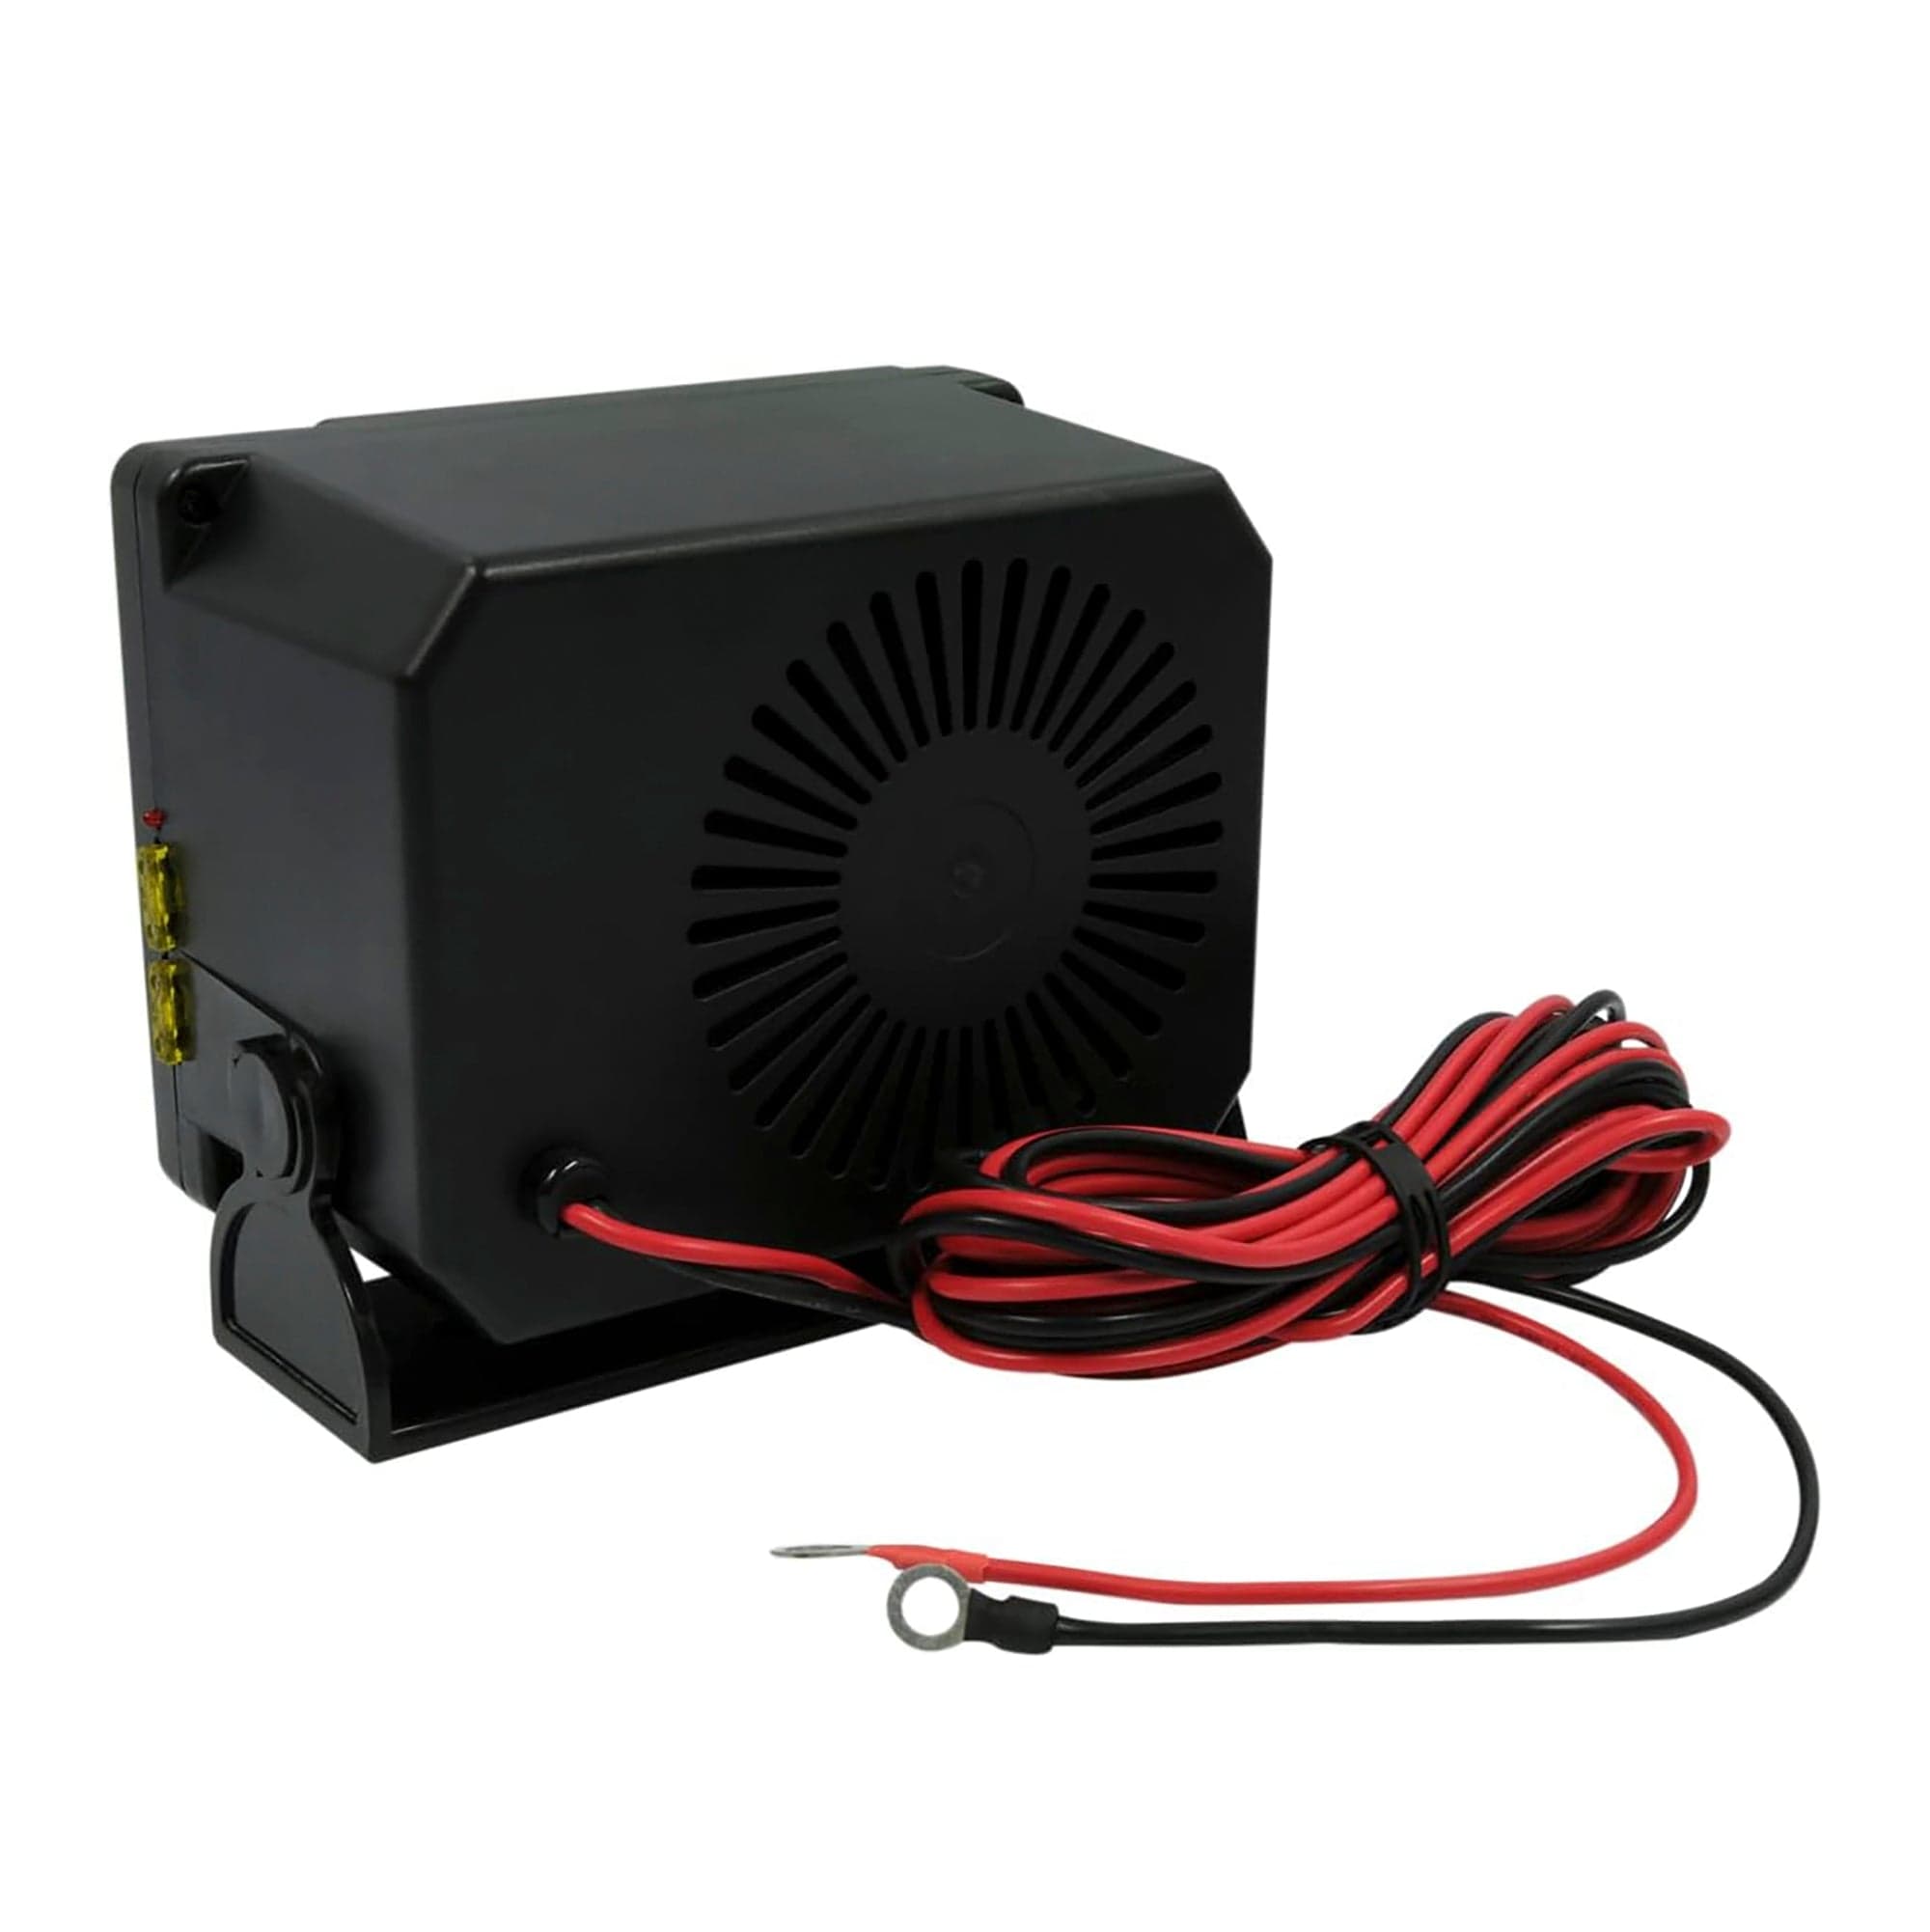 Roadpro RPSL-681 12-Volt Direct Hook-Up Ceramic Heater/ Fan with Swivel Base